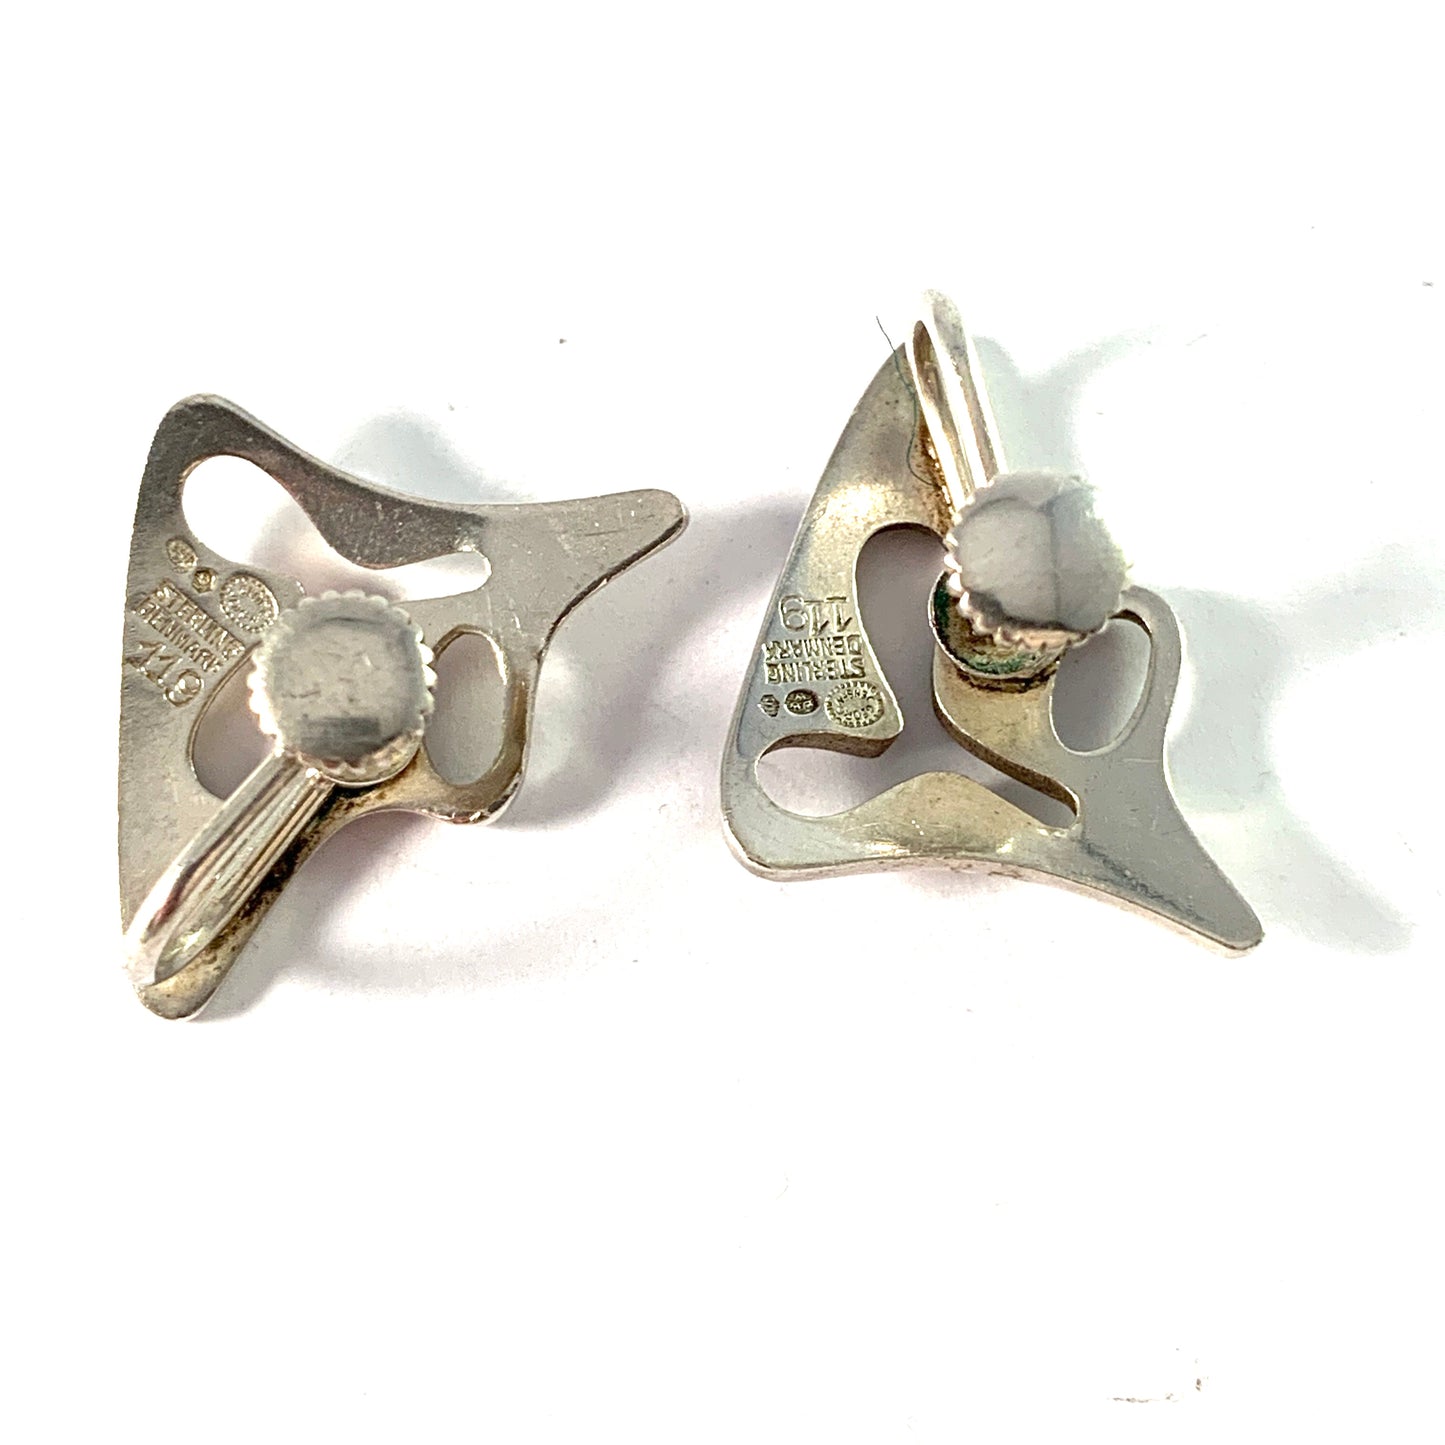 Georg Jensen, Denmark Mid Century Sterling Silver Earrings. Design no 119 Splash by Henning Koppel.